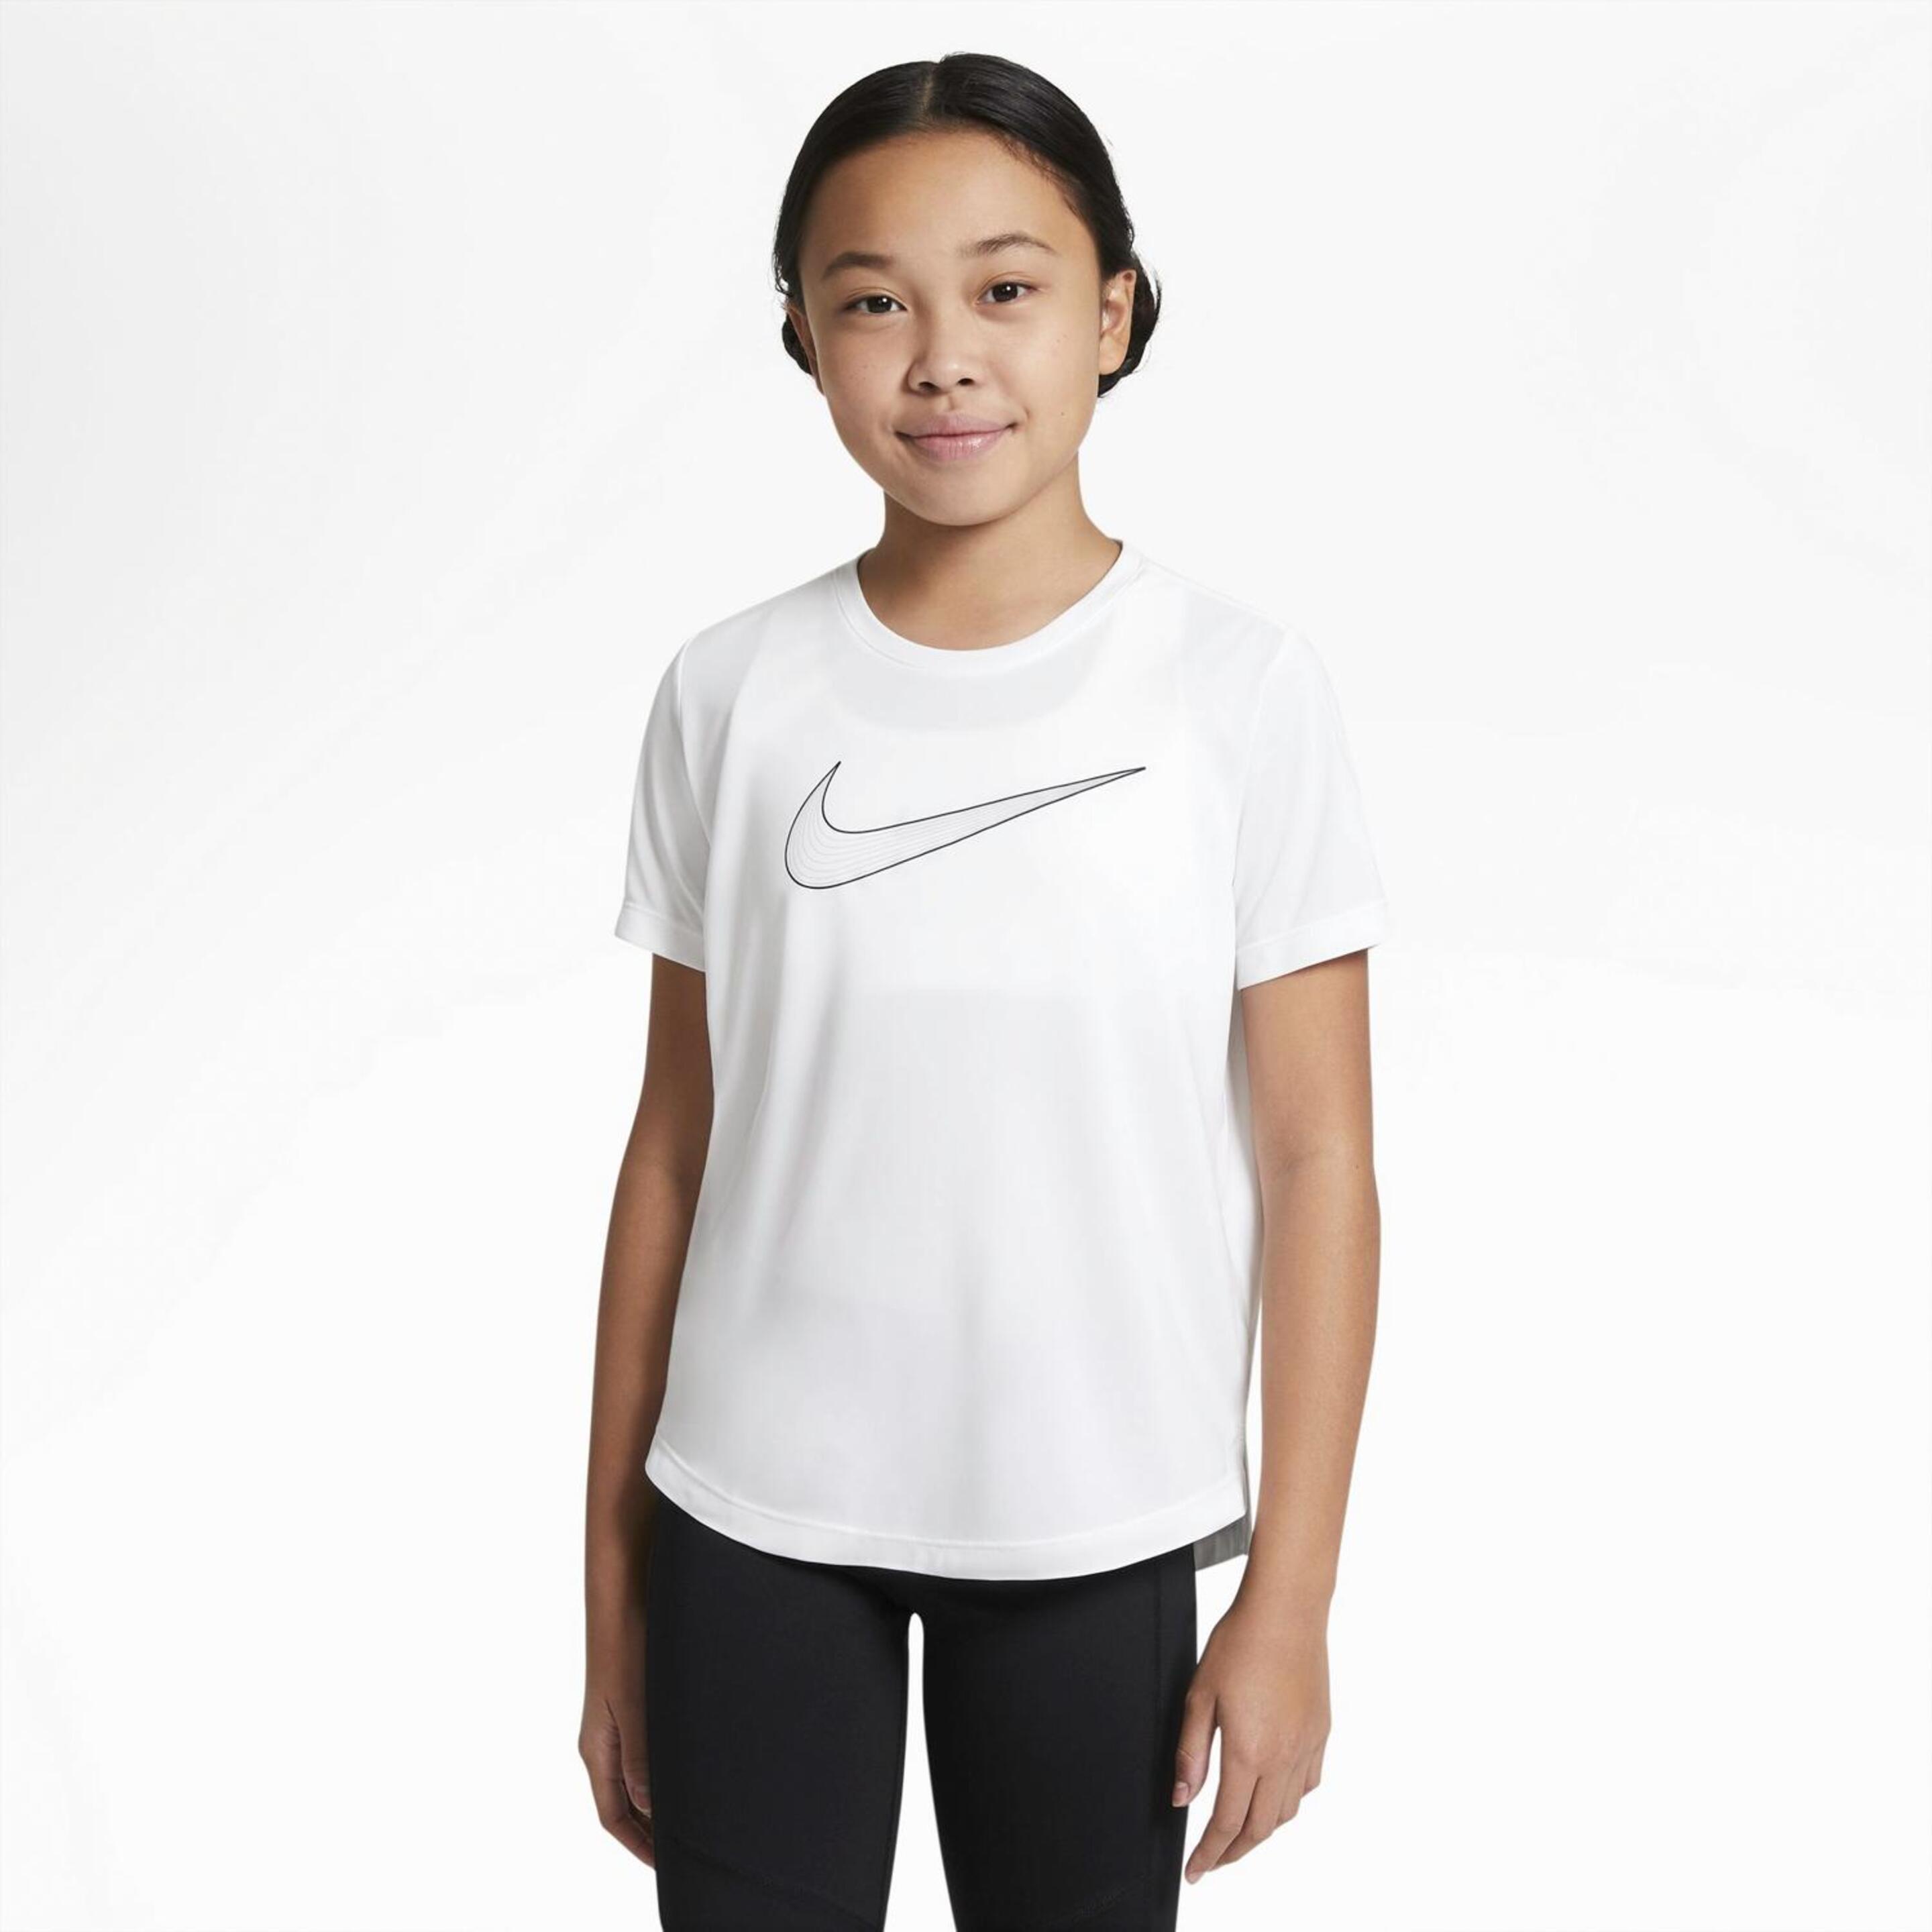 Nike One - blanco - Camiseta Fitness Chica